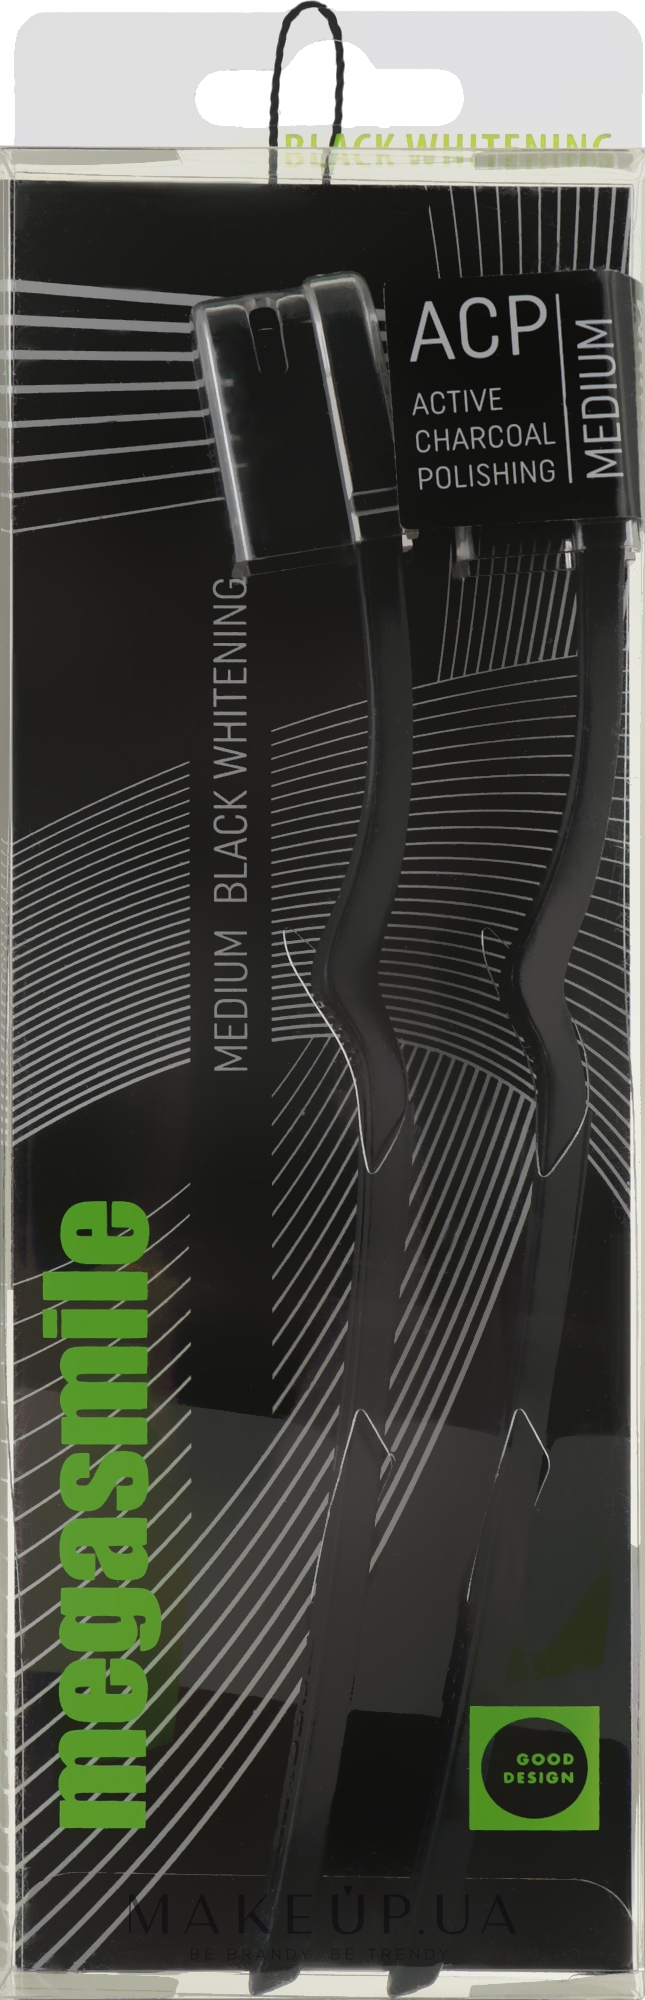 Зубна щітка "Блек вайтенінг", чорна + чорна - Megasmile Medium Whiteninng Toothbrush — фото 2шт